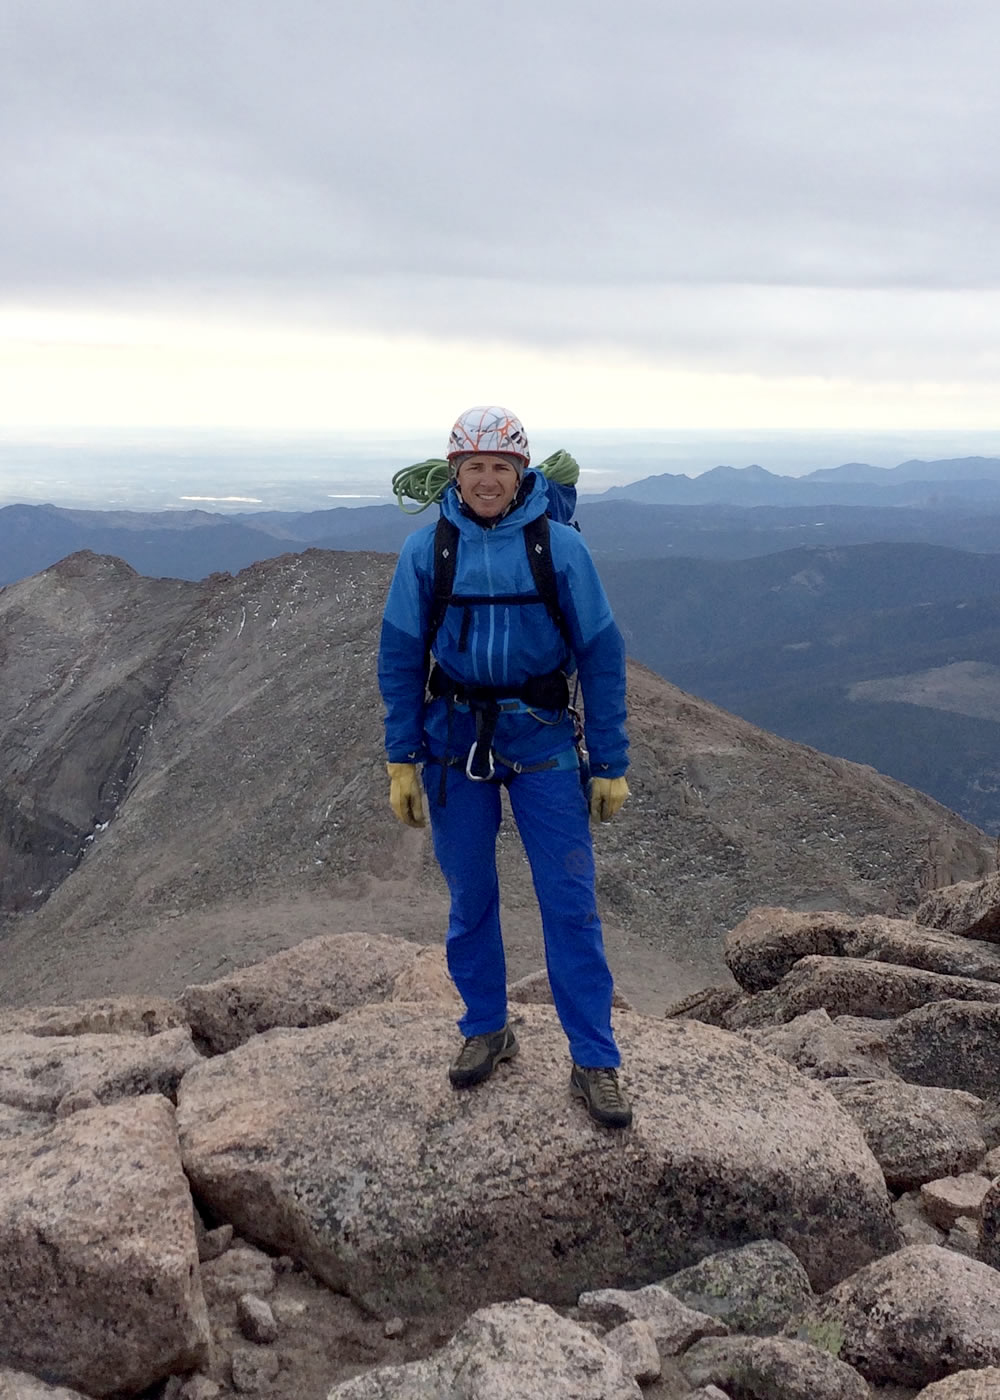 Mike Lewis wearing the Yotei Jacket on the summit of Longs Peak (14,259'), Colorado. [Photo] John Kvederis